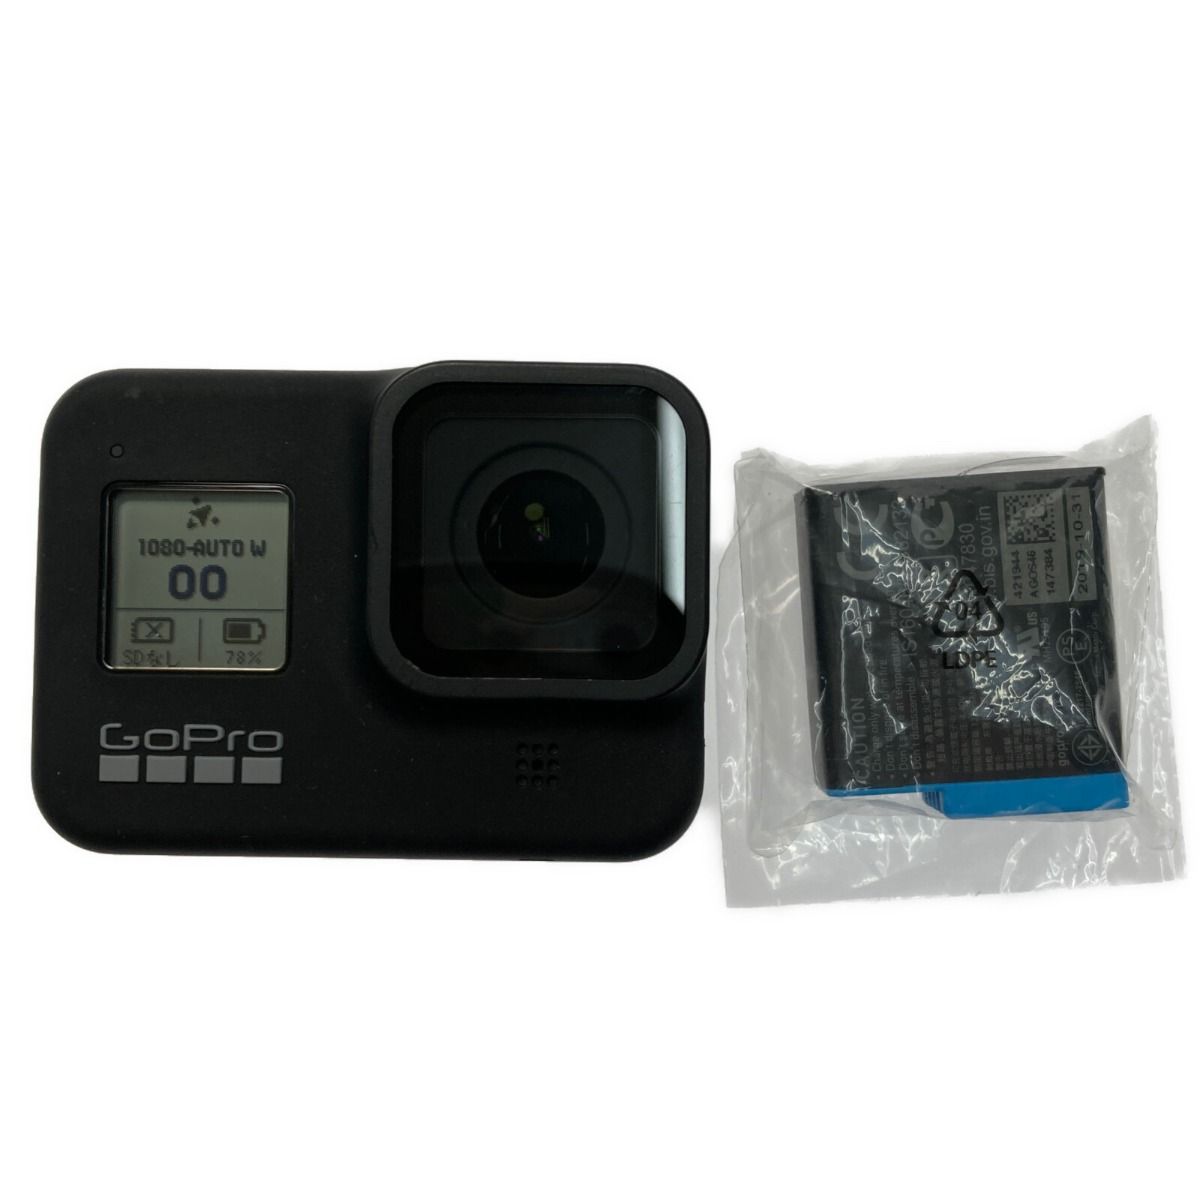 GoPro GoPro HERO8 Black 限定BOXゴープロ ヒーロー8 CHDRB-801-FW  :20220426062819-00059us:momocoro store - 通販 - Yahoo!ショッピング - カメラ